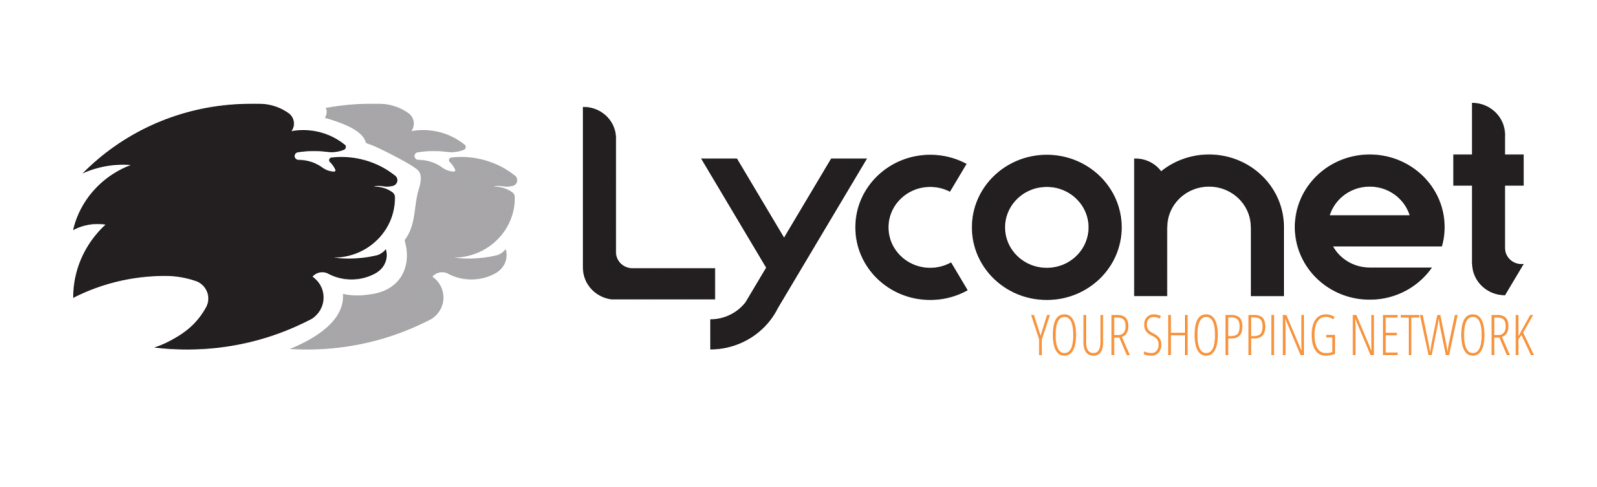 lyconet_logo